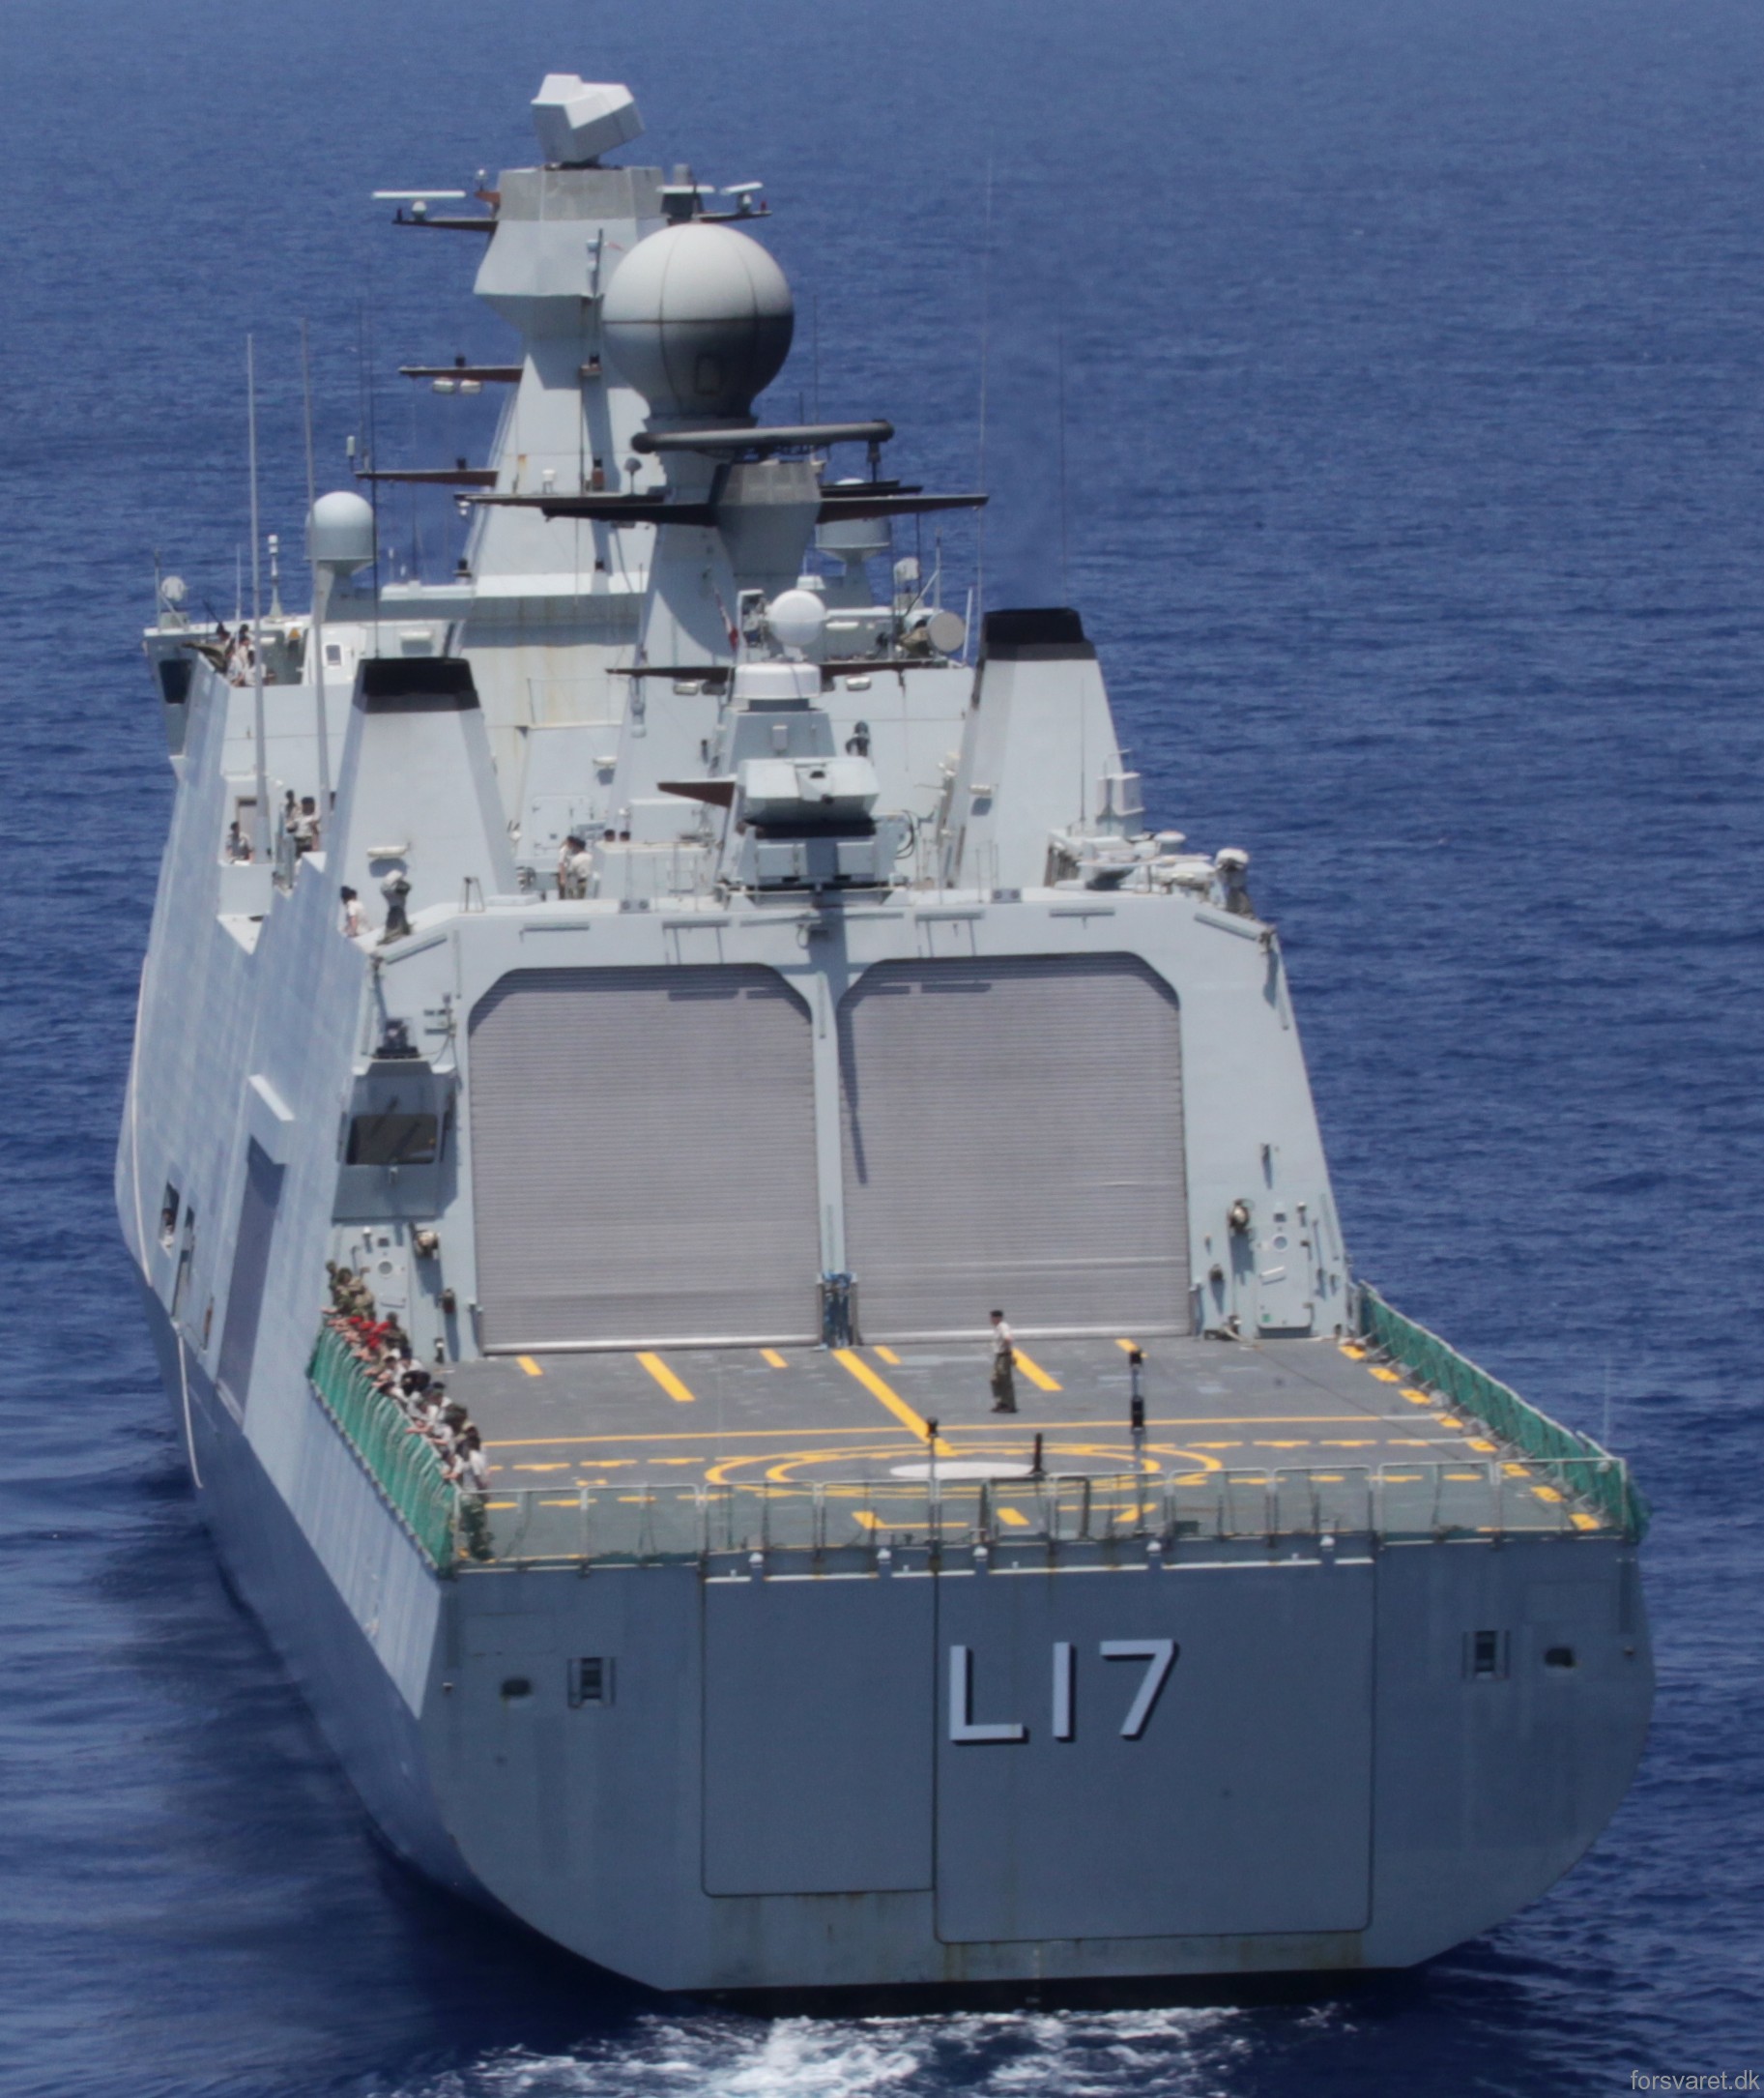 f-342 hdms esbern snare l-17 frigate command support ship royal danish navy 18